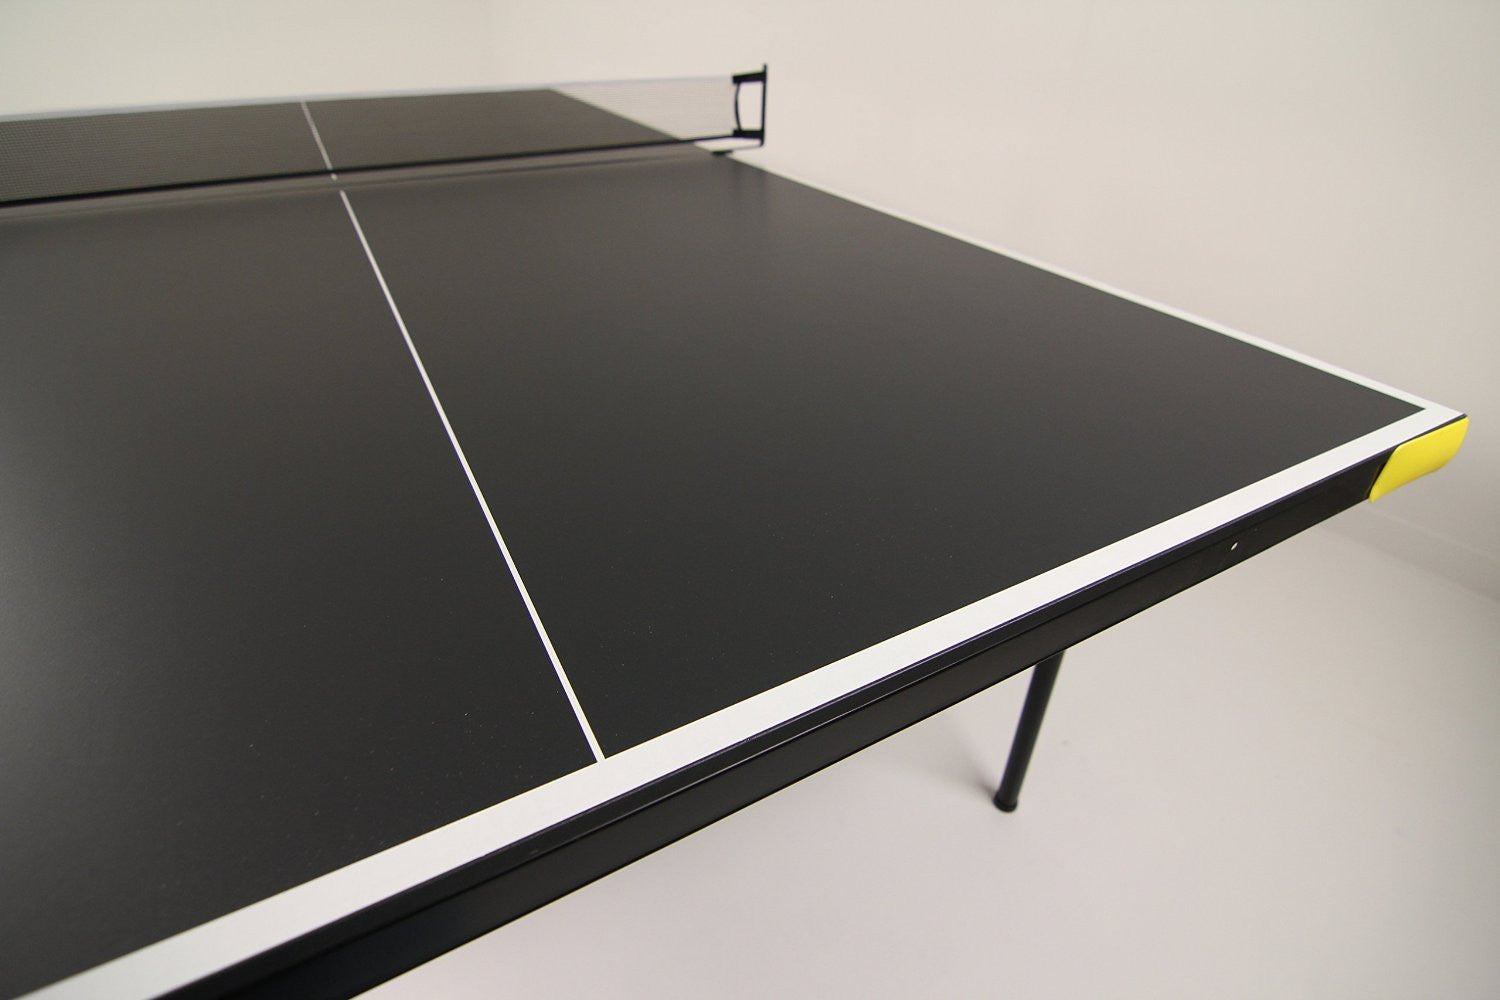 Stiga Legacy Table Tennis Table